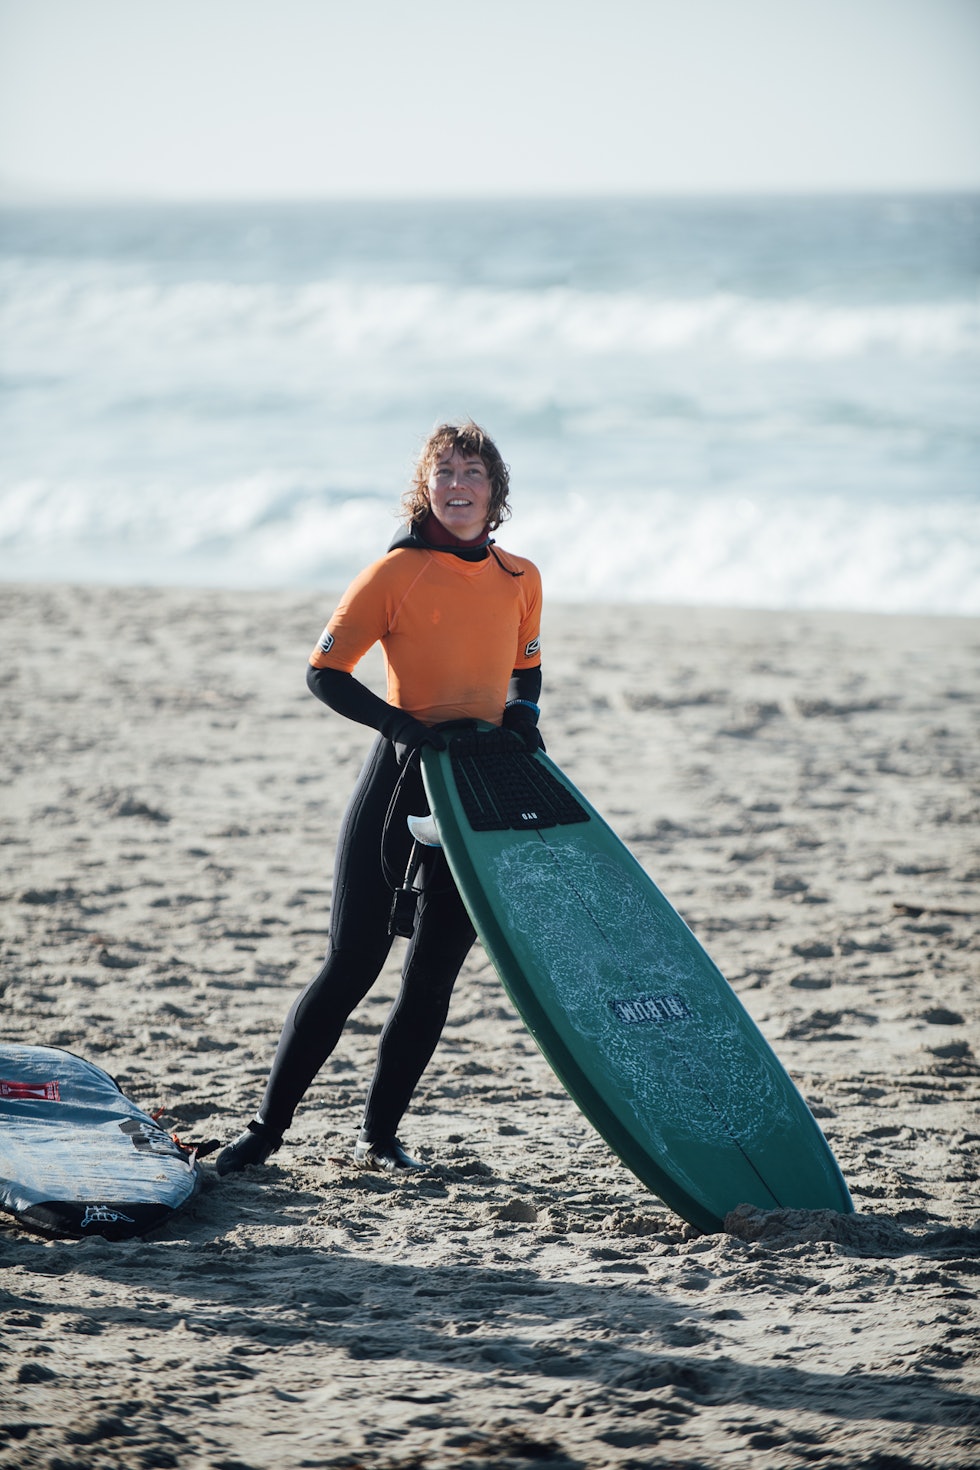 ENDELIG TOPPEN: Etter en lang karriere som konkurrerende surfer, sikret omsider Camilla Pedersen kongepokalen i surf. Foto: Runa Pedersen